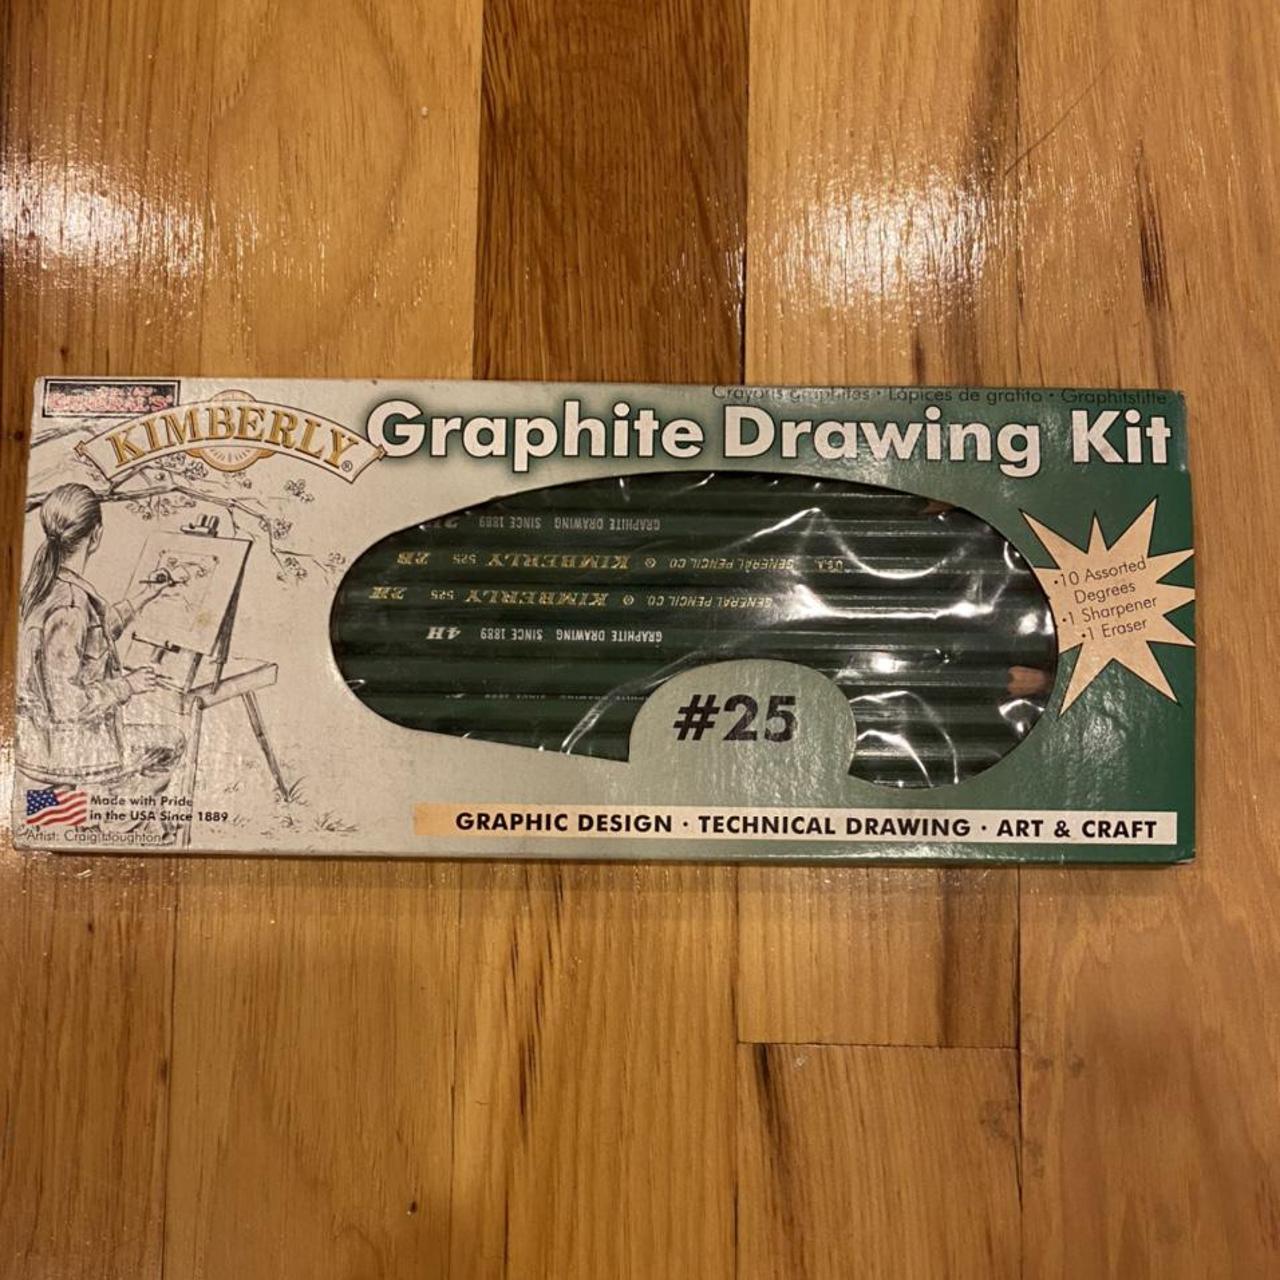 Kimberly Graphite Drawing Kit